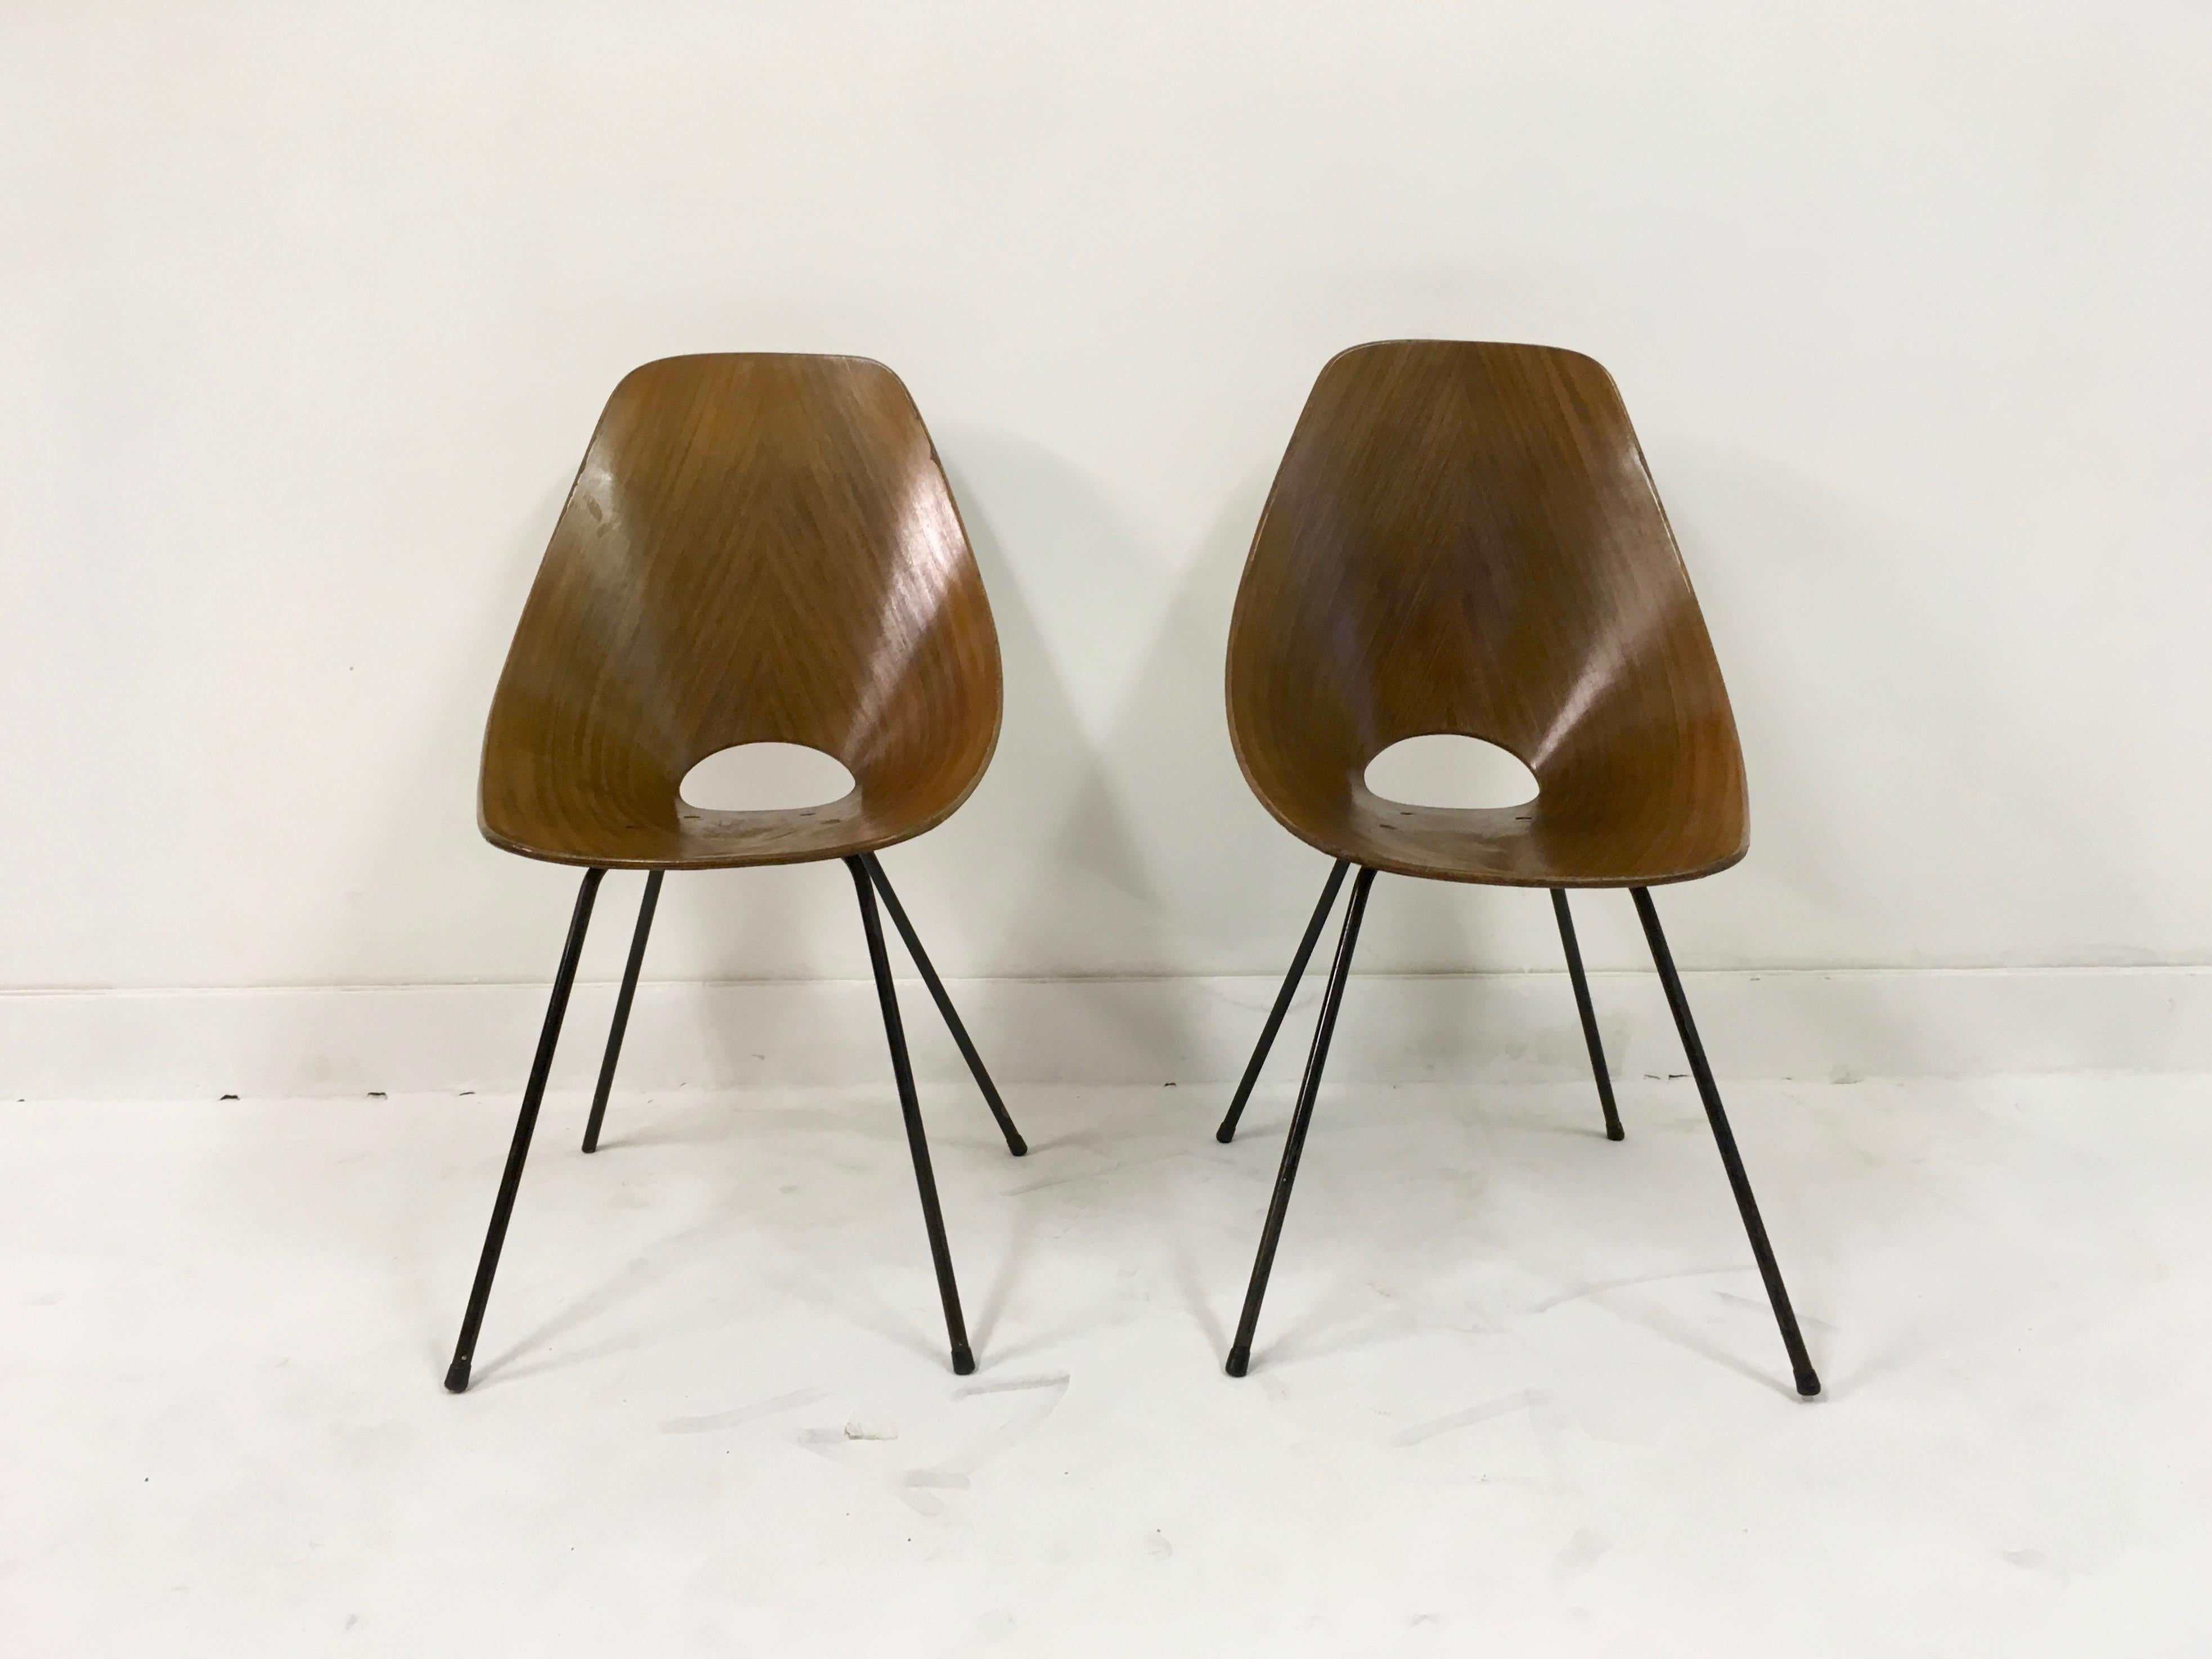 Teak Pair of Midcentury Italian Medea plywood chairs by Nobili, 1950s